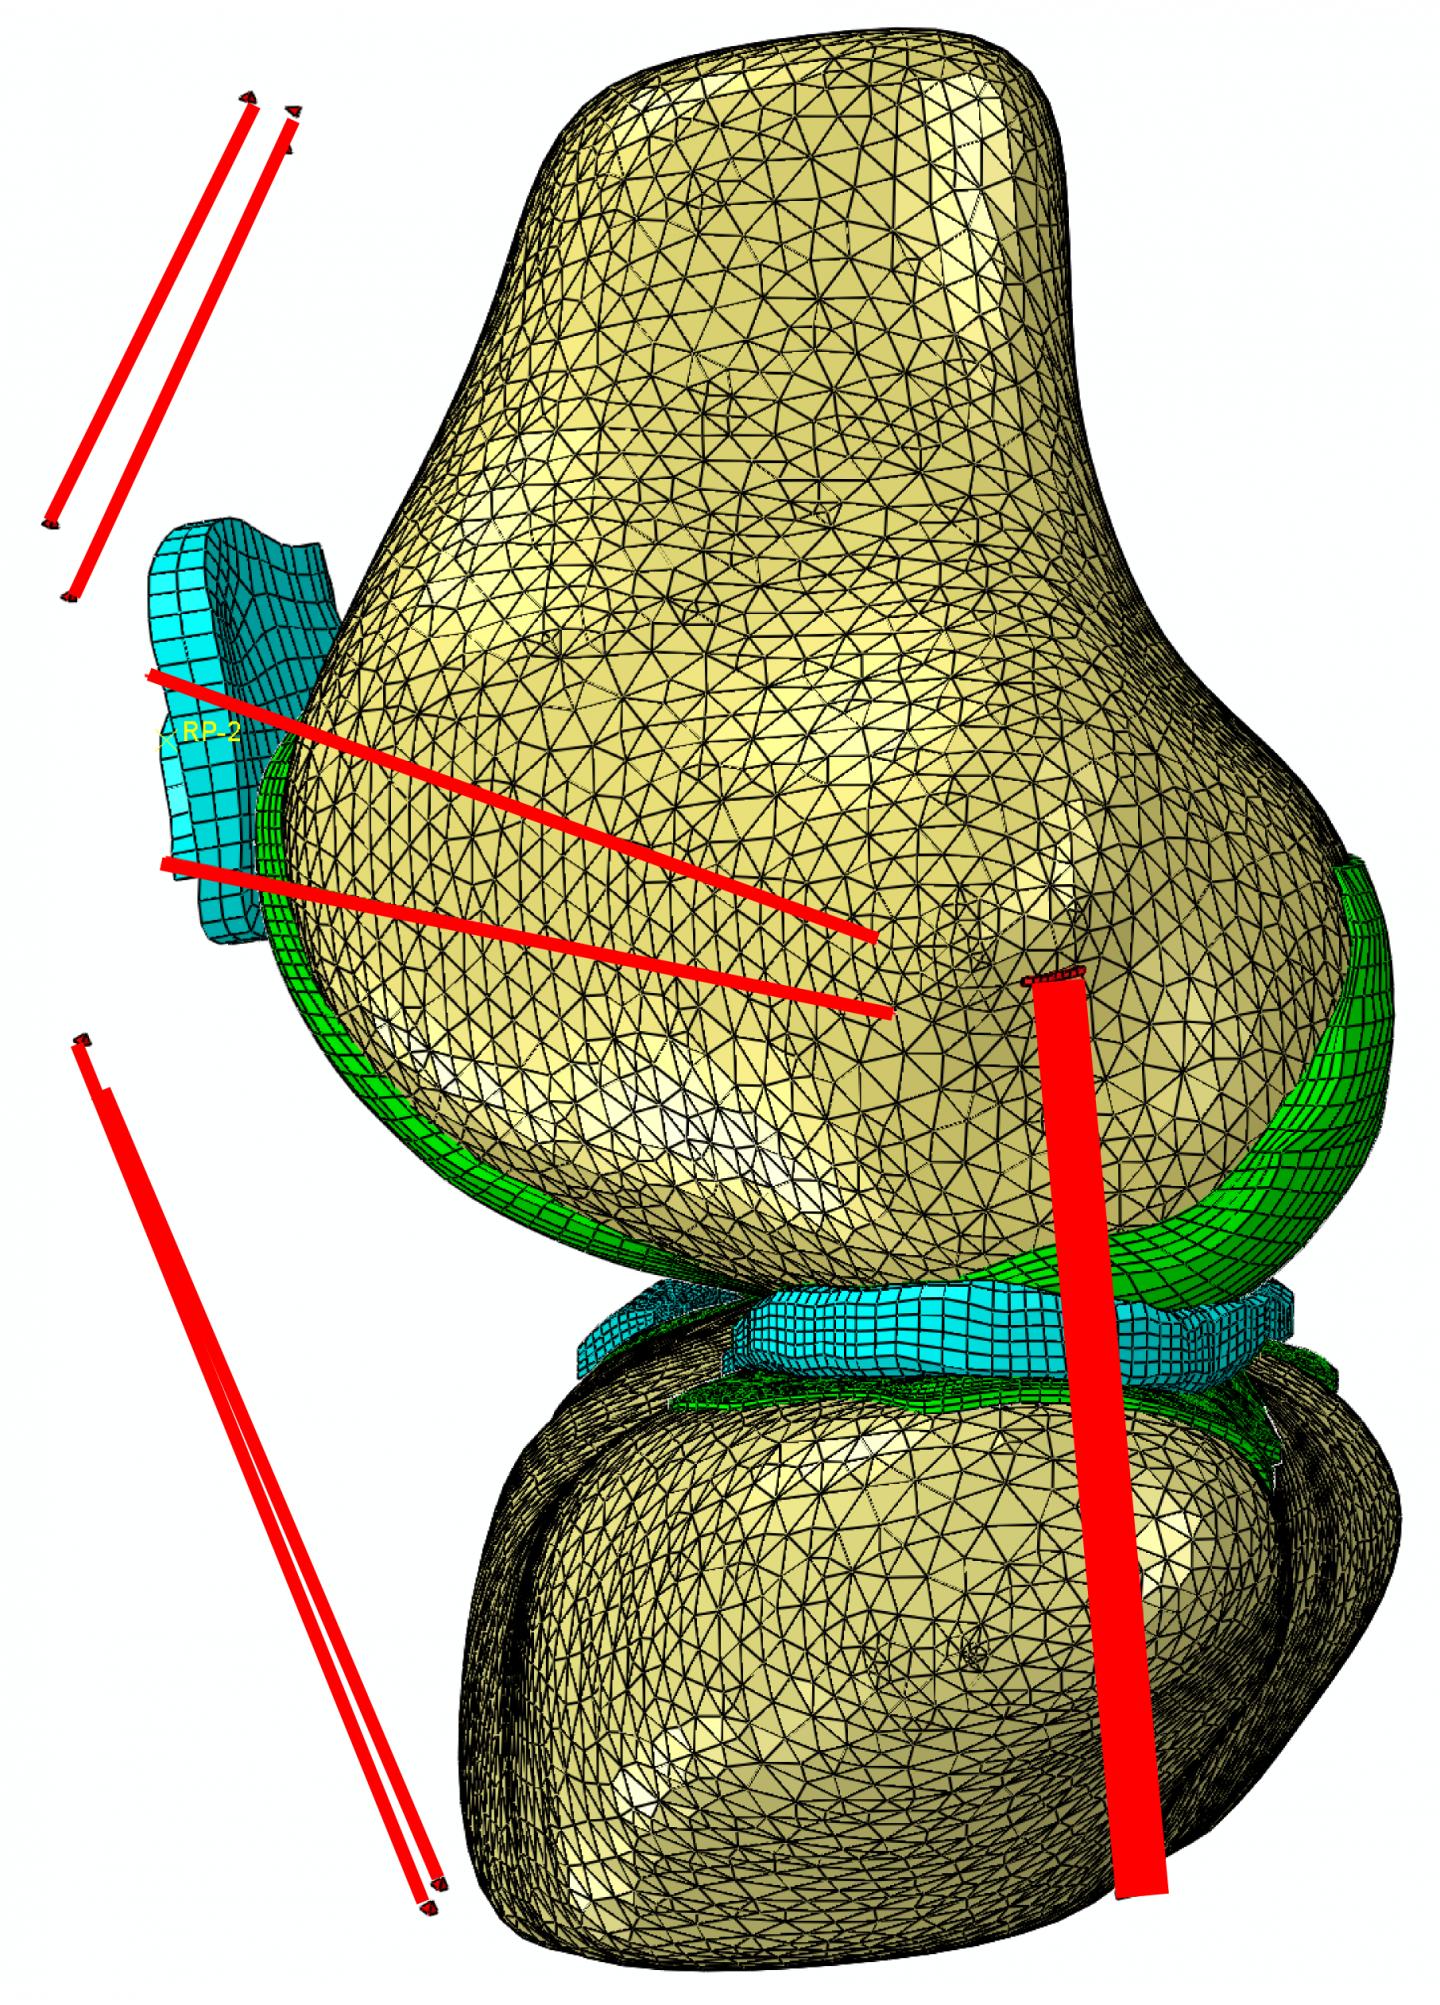 3-D Model of the Test Subject's Knee